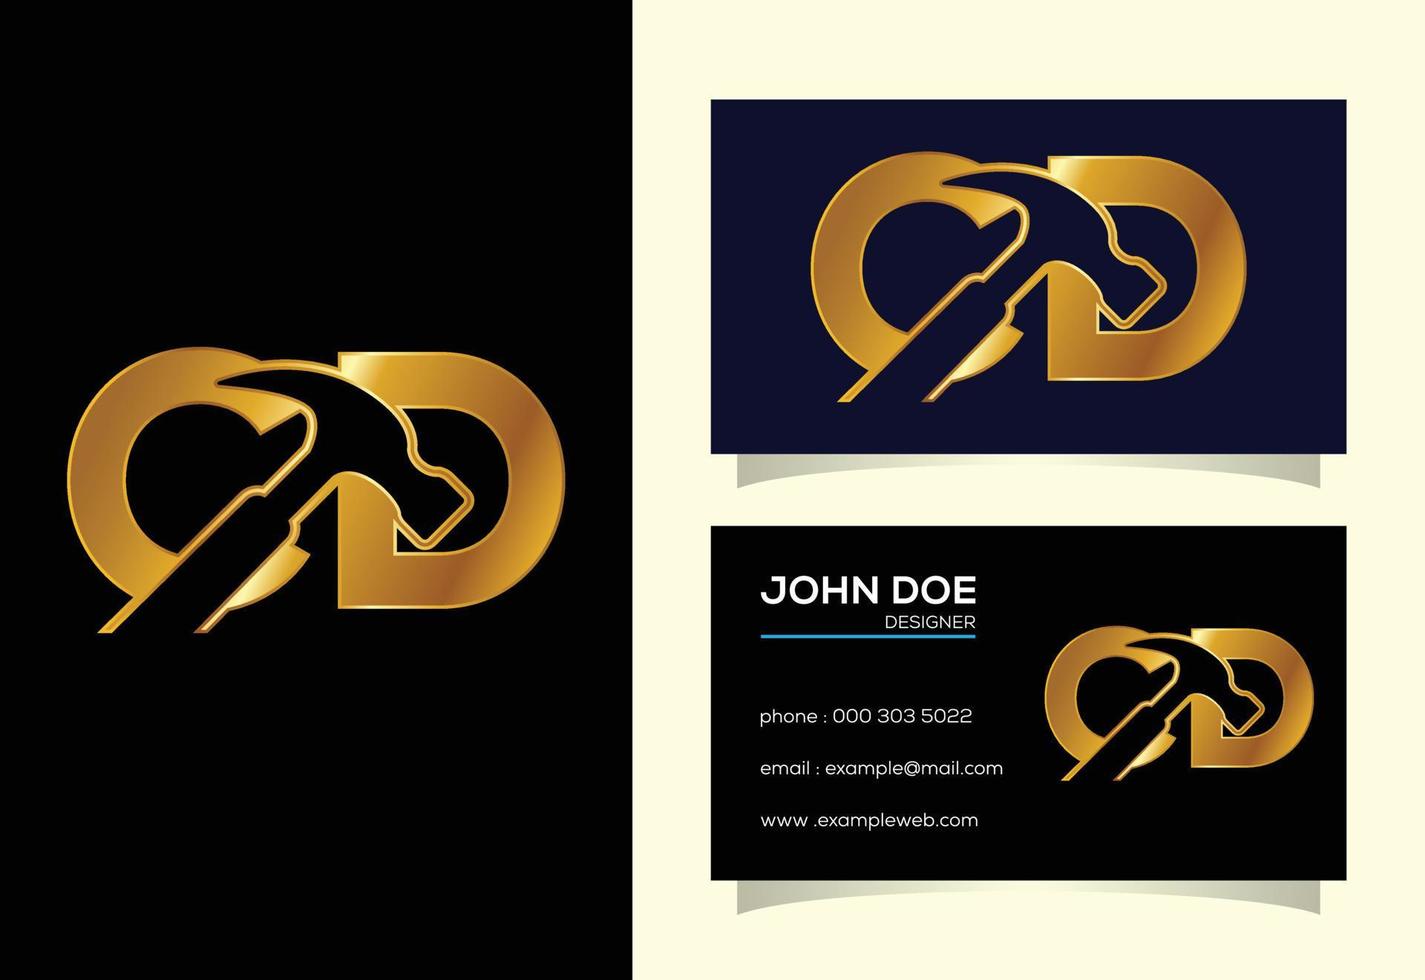 vetor de design de logotipo de cd letra inicial. símbolo gráfico do alfabeto para identidade de negócios corporativos